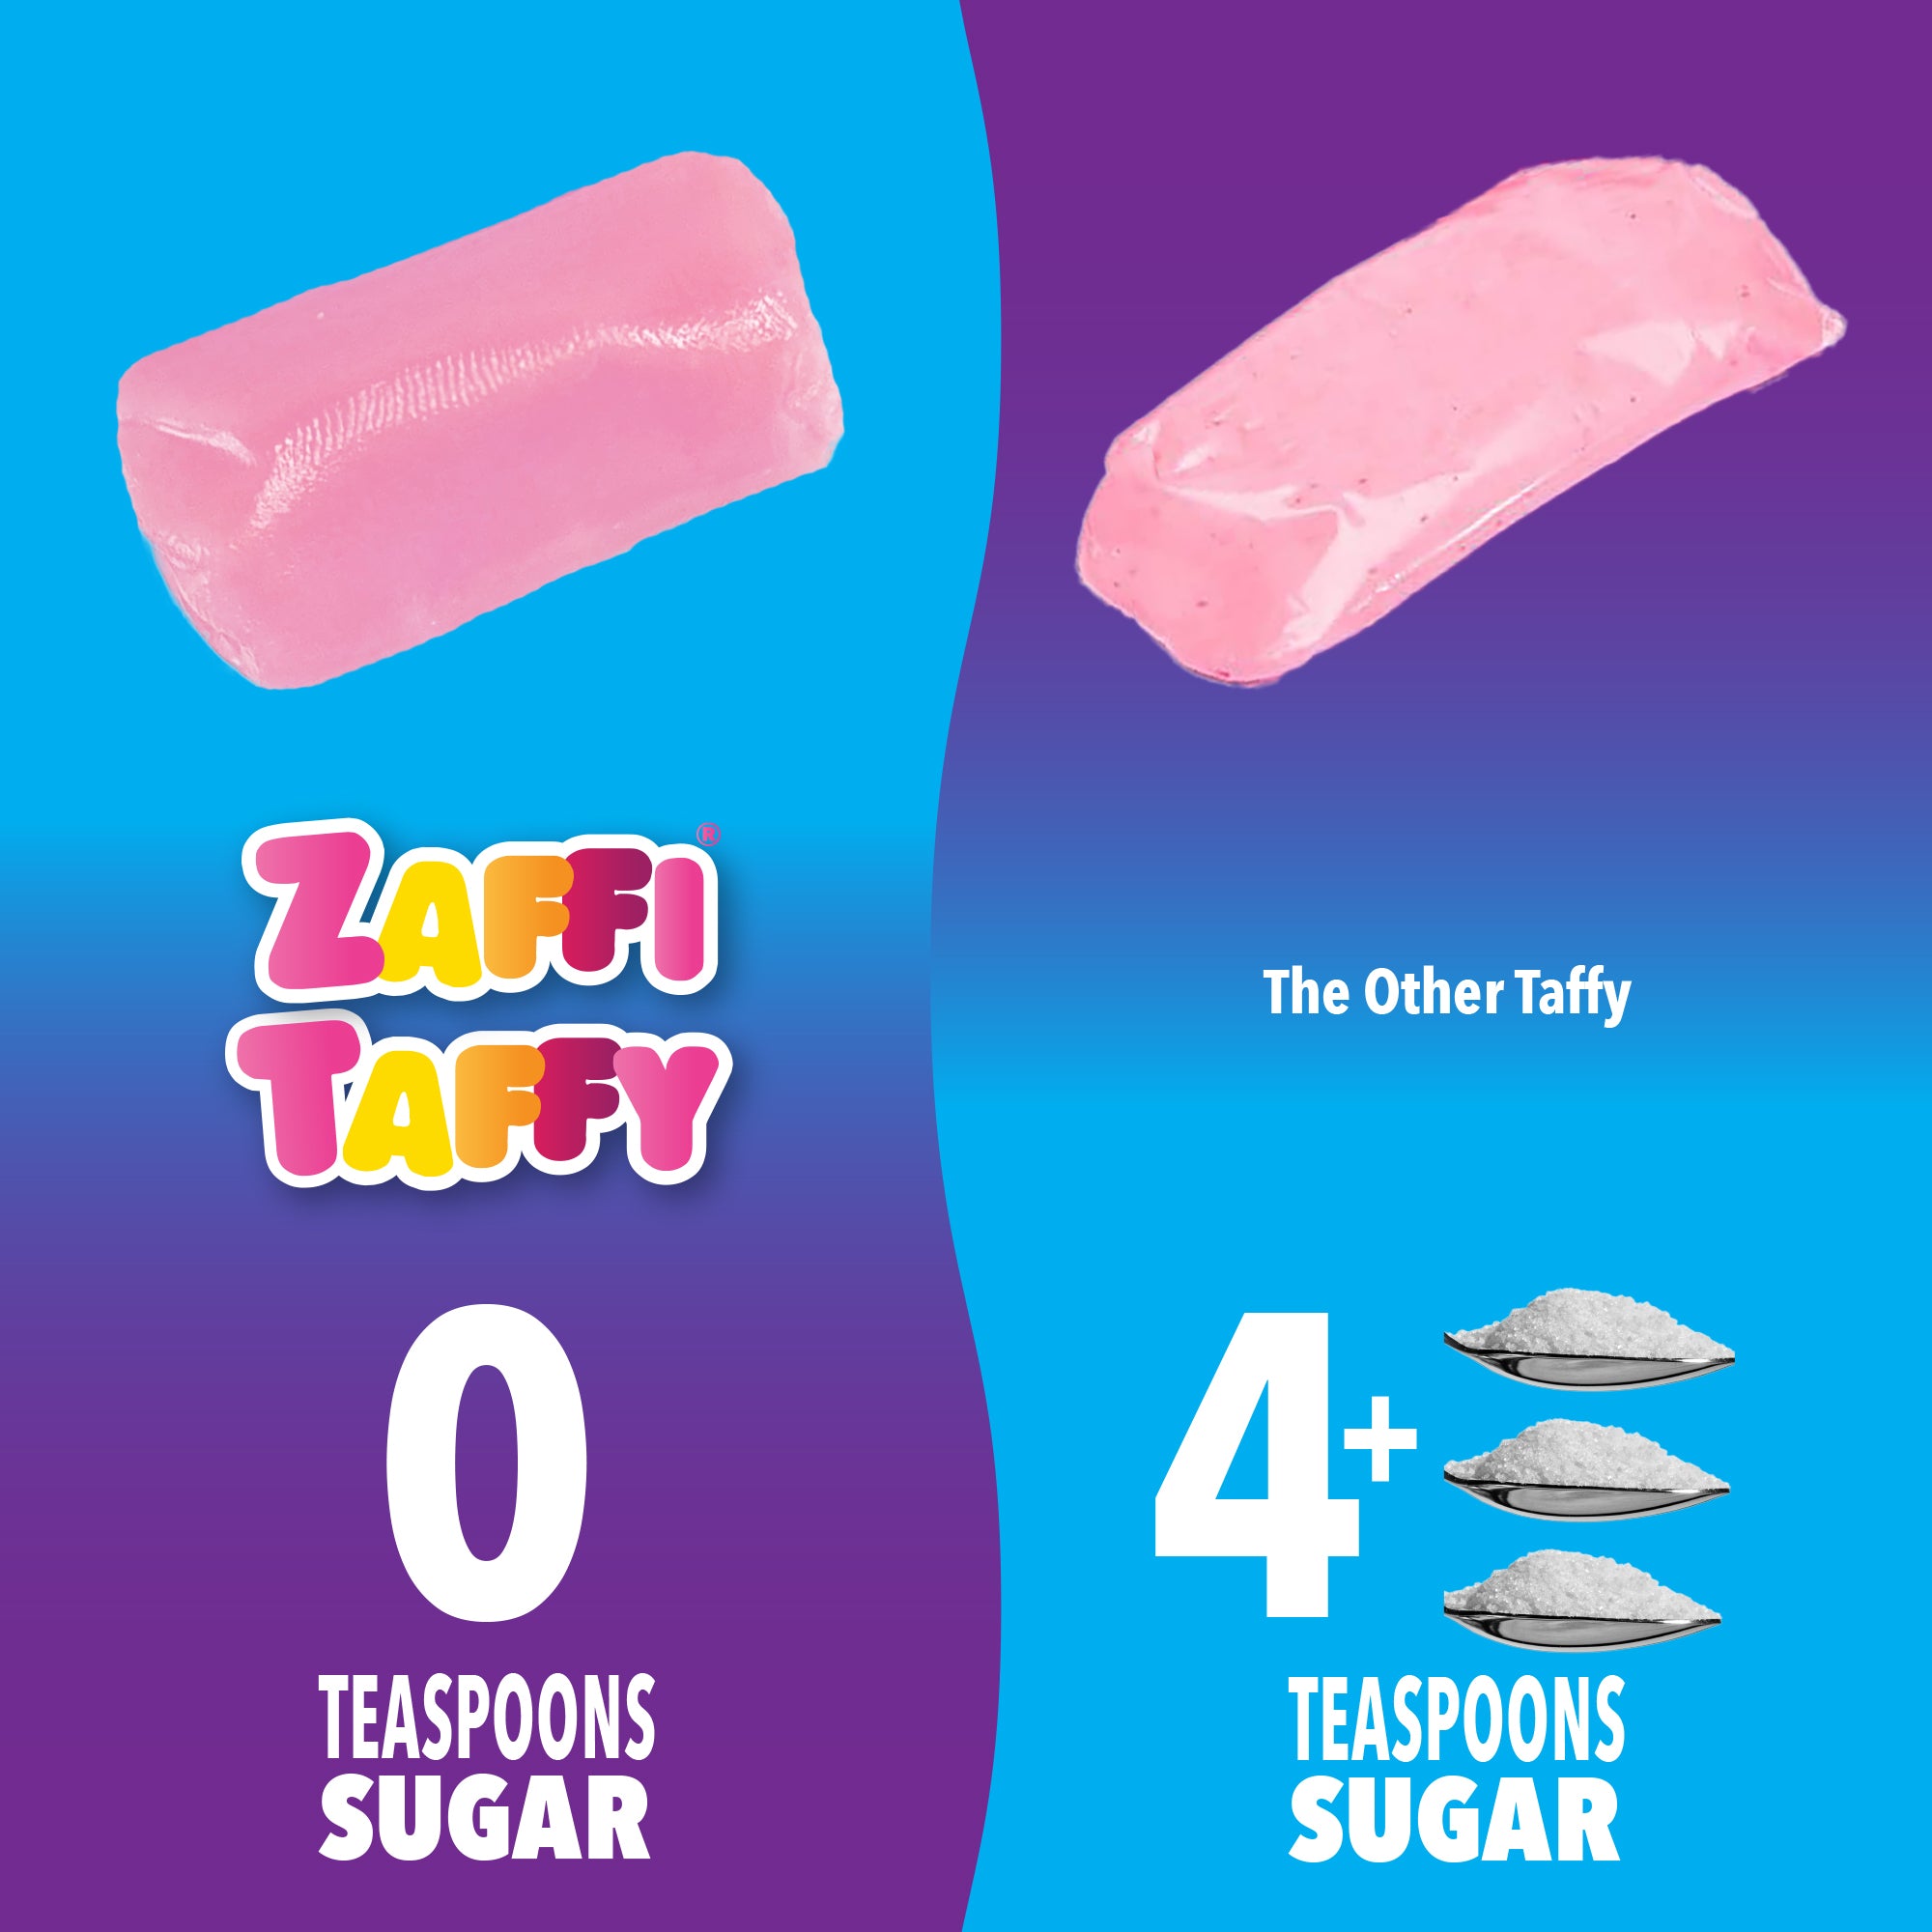 Zolli Zaffi Taffi have 0 teaspoons of sugar. Competing taffy have 4 teaspoons of sugar.